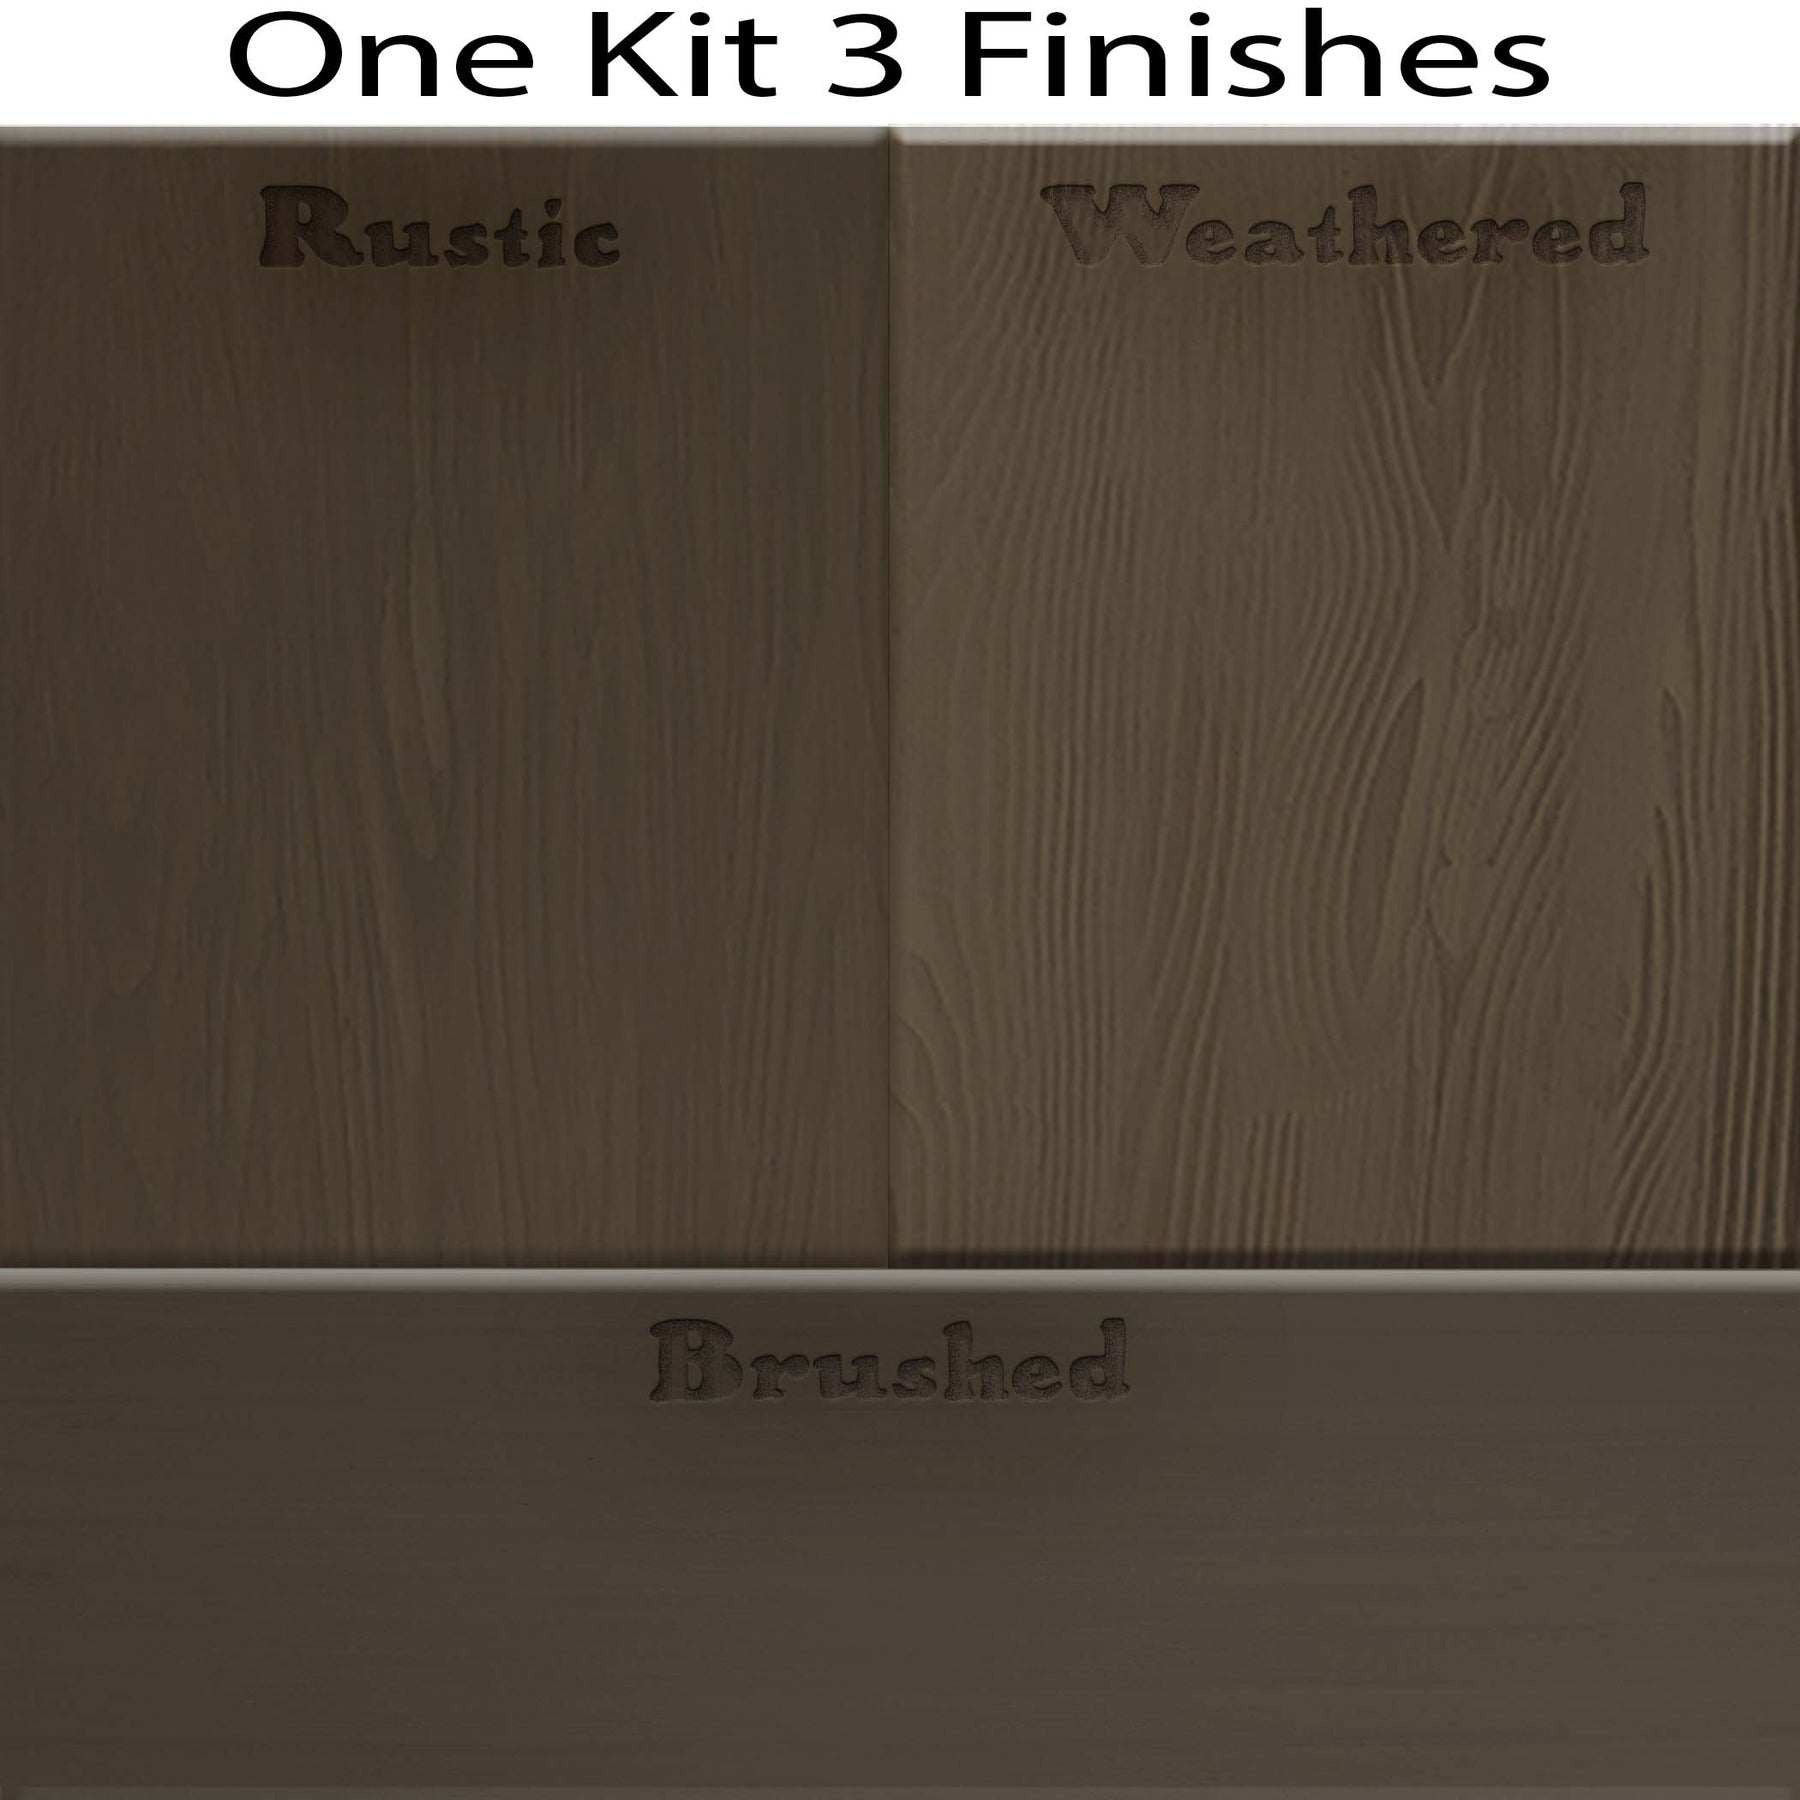 Wood'n Cabinet Kit (48 Door / Grained) - Charcoal